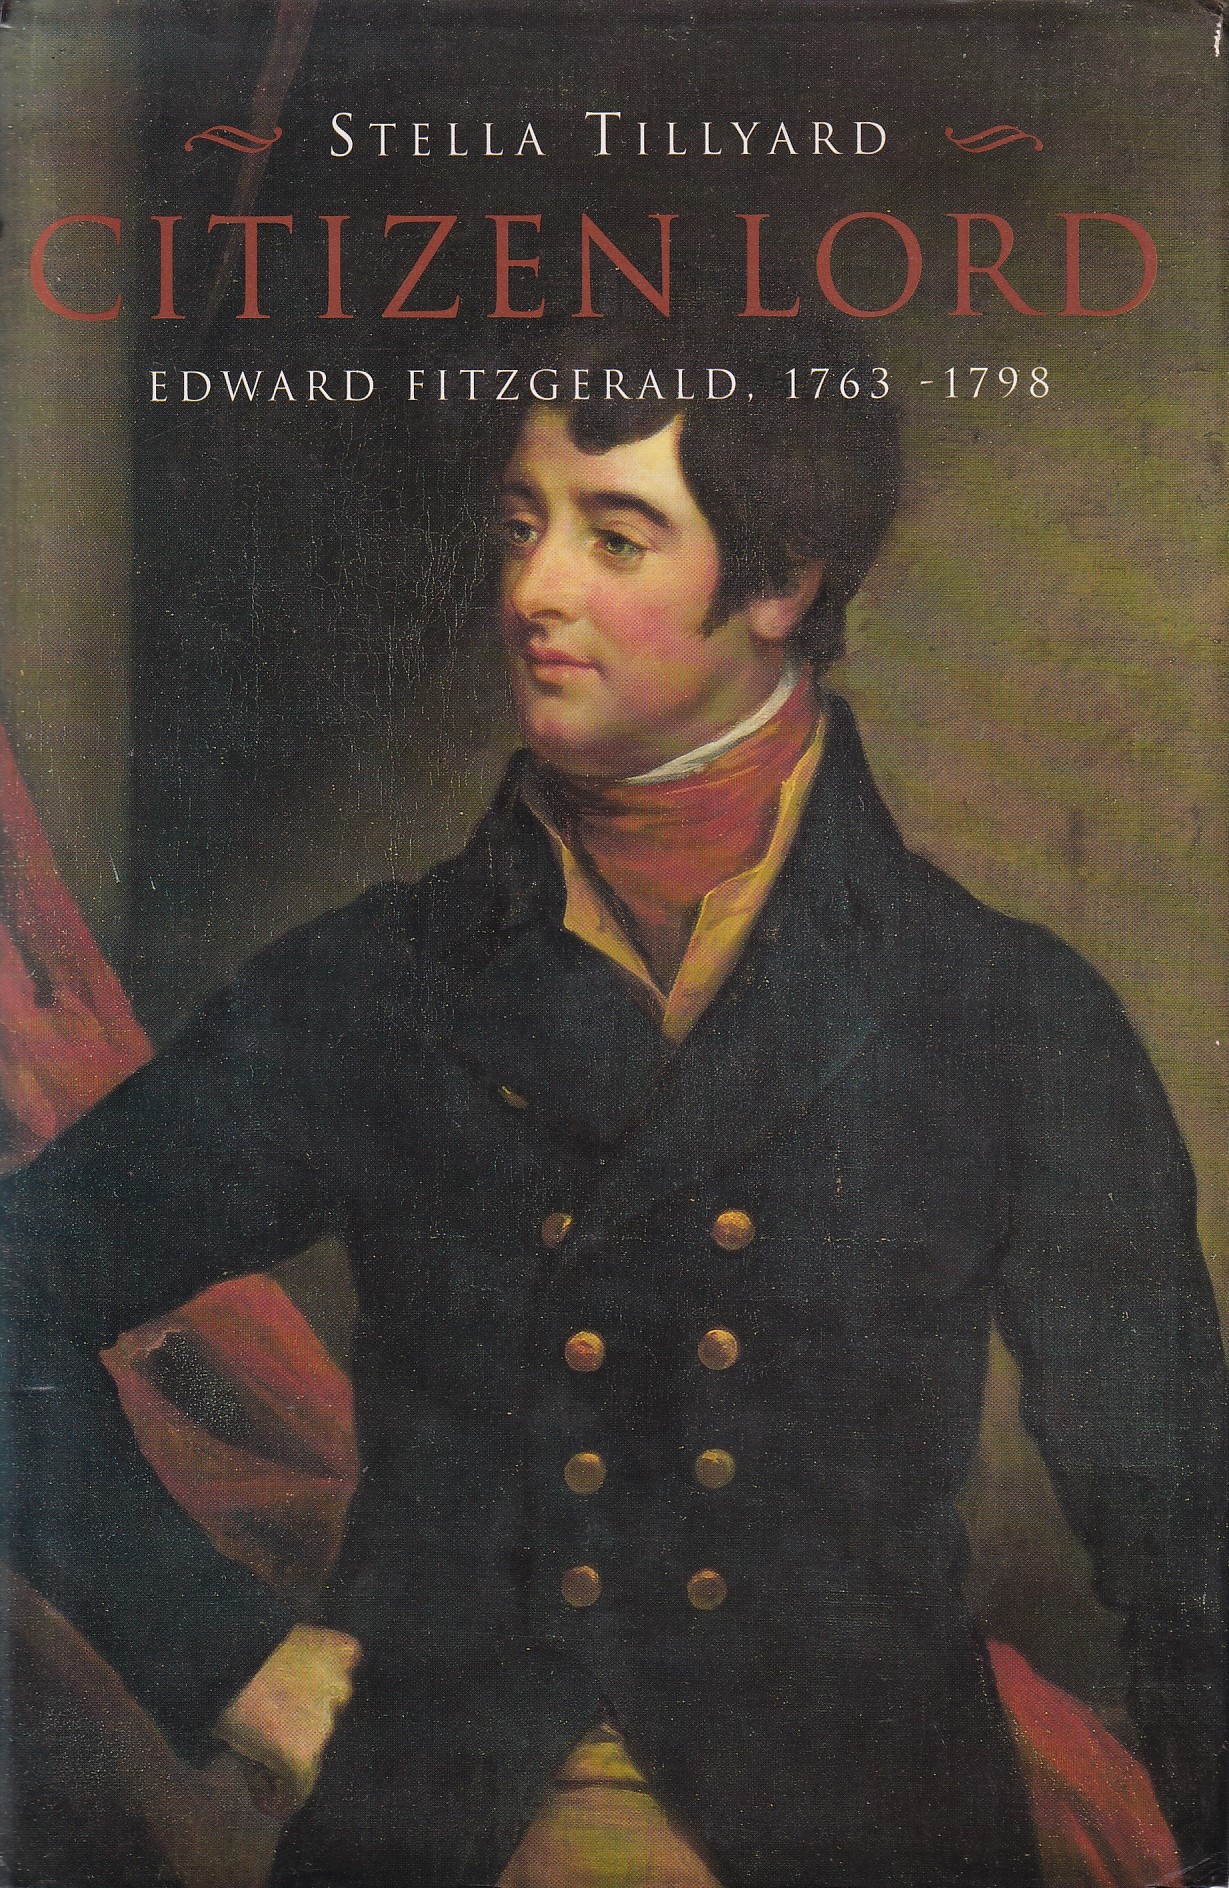 Citizen Lord: Edward Fitzgerald, 1763 – 1798 by Stella Tillyard